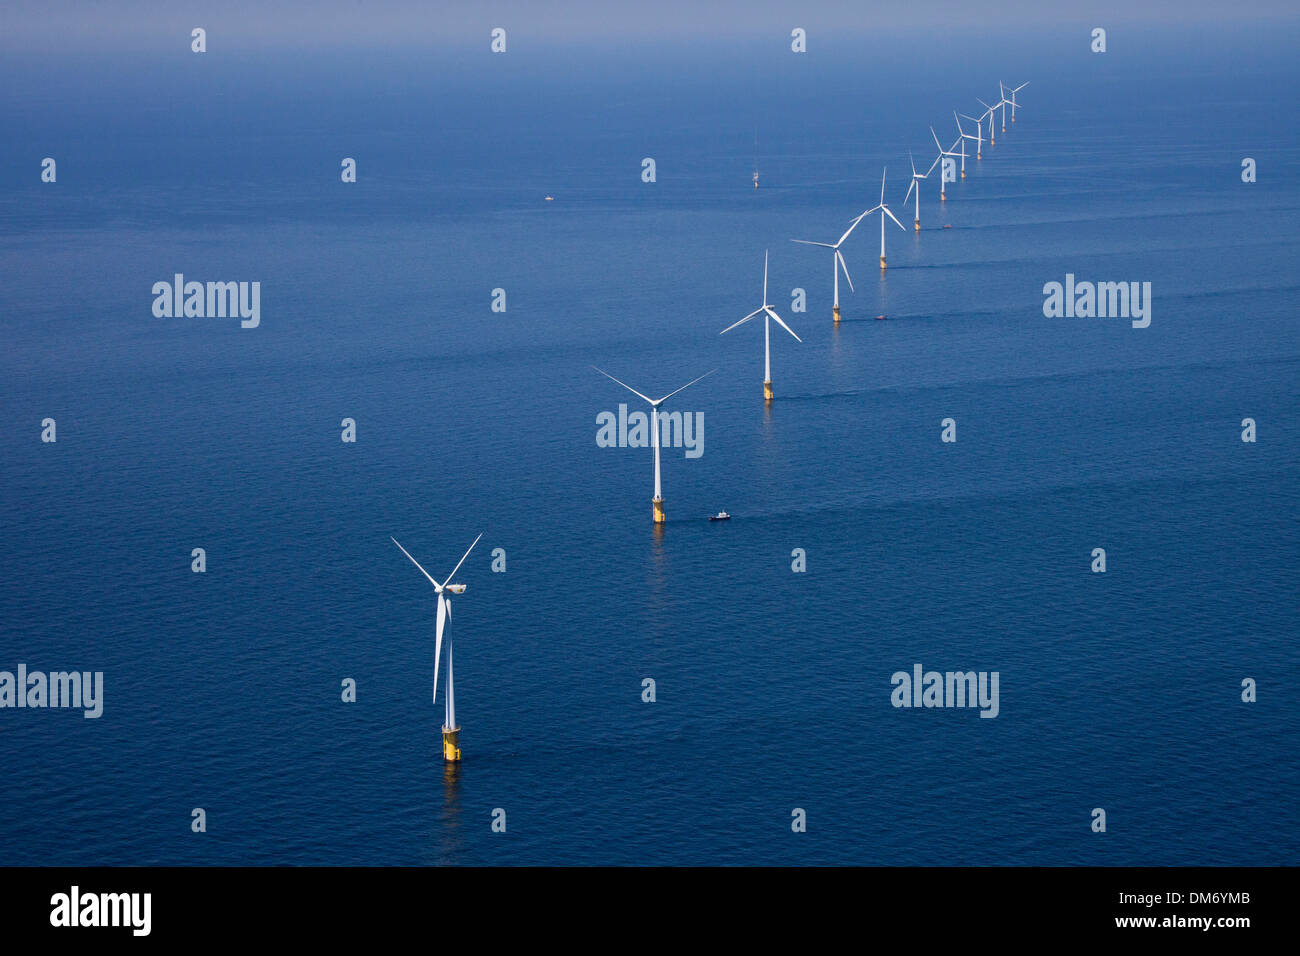 Dutch windmills in the North Sea Stock Photo